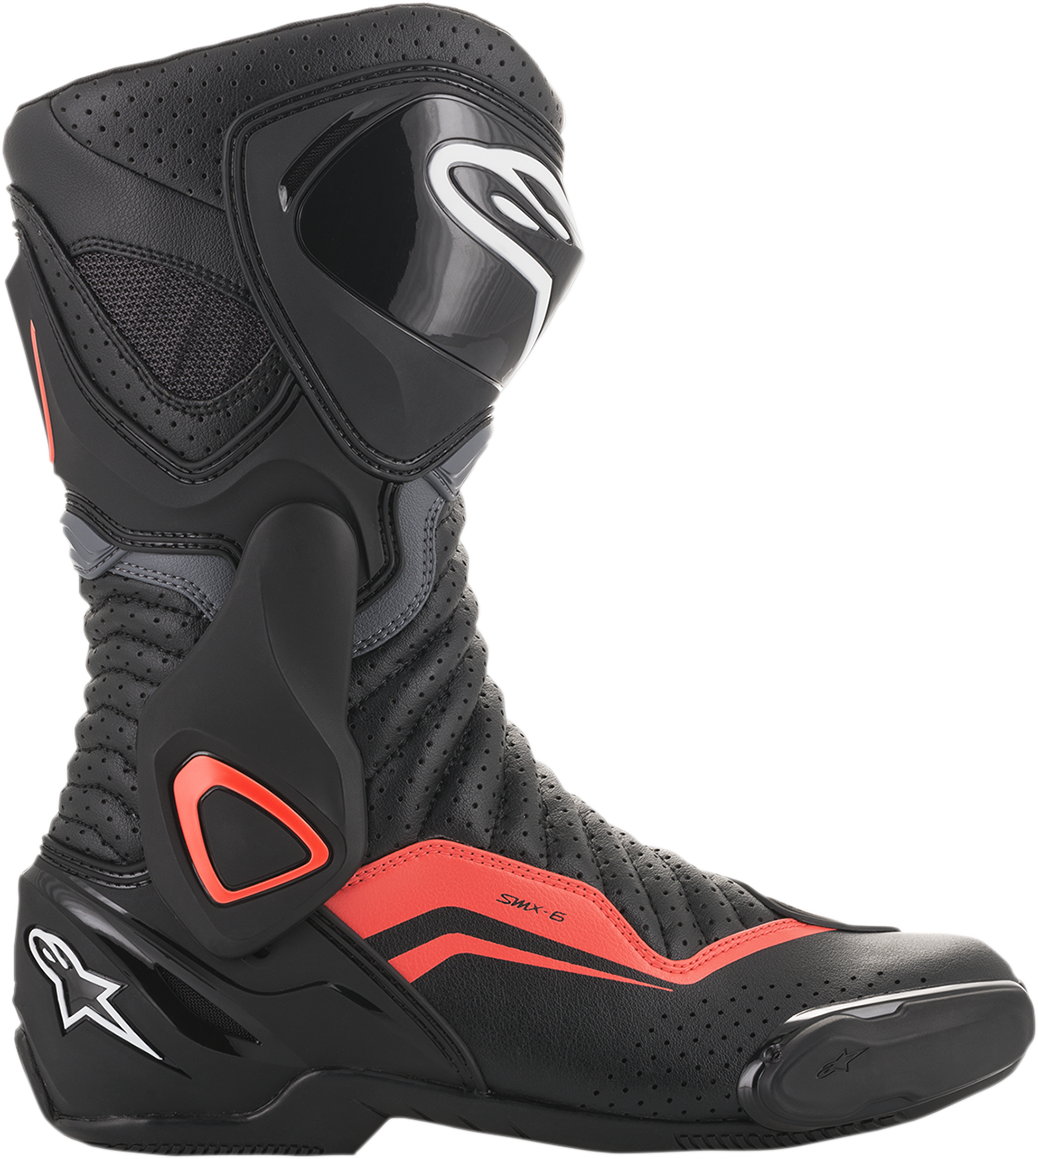 ALPINESTARS SMX-6 v2 Vented Boots - Black/Gray/Red - US 6.5 / EU 40 2223017-1133-40